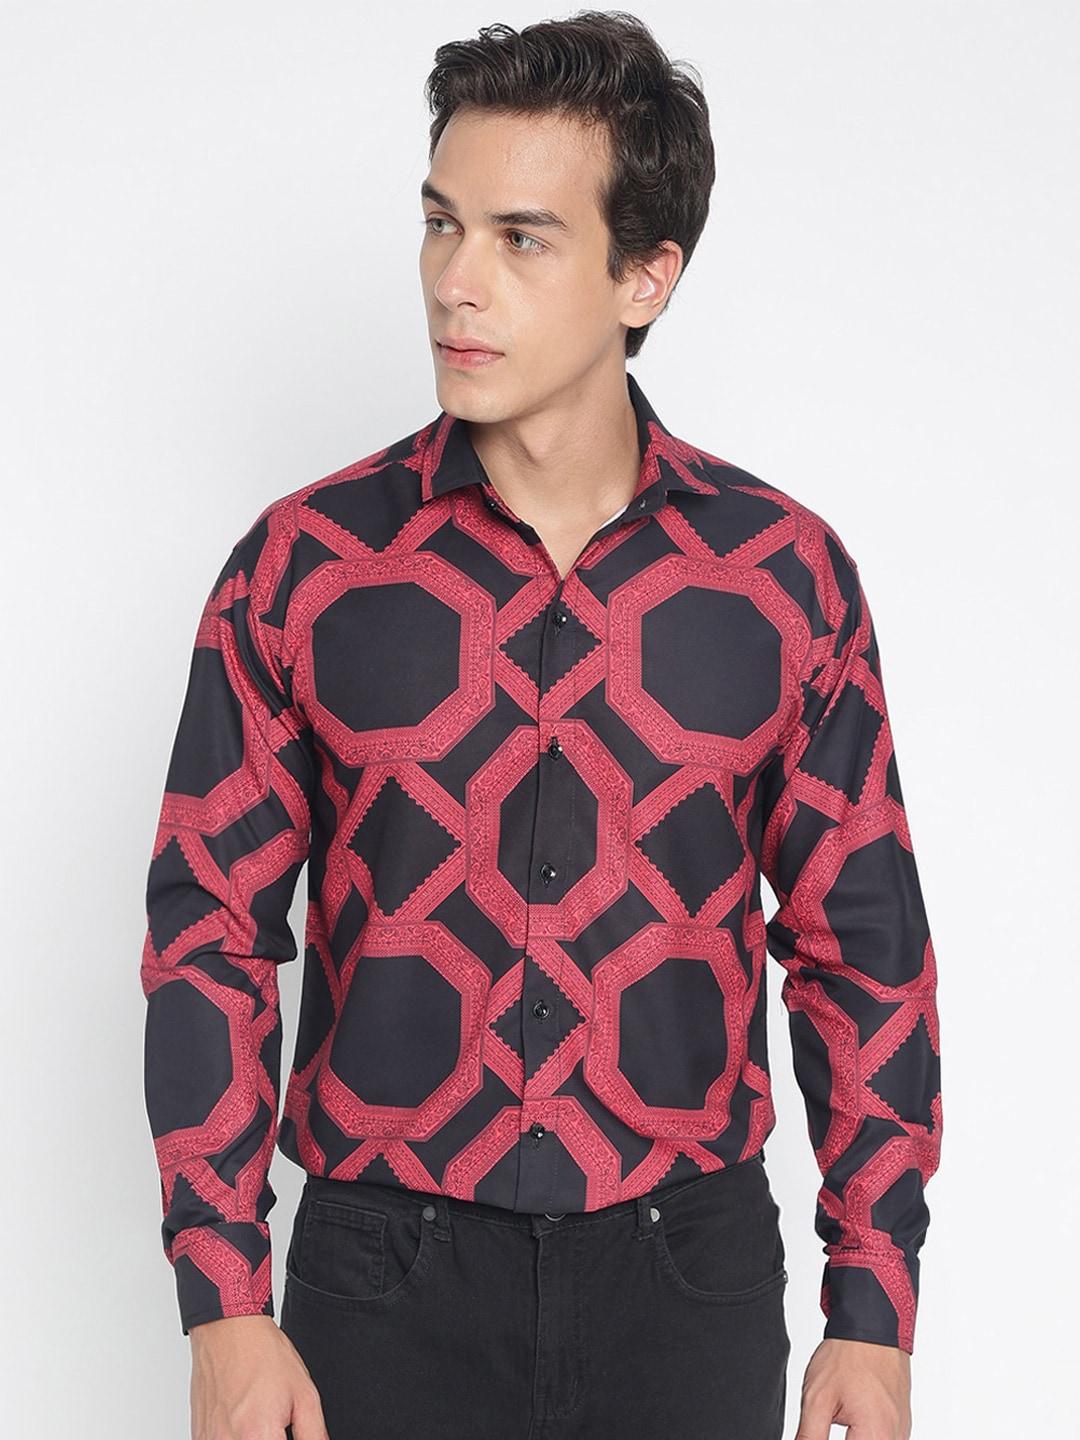 colorwings comfort geometric printed opaque casual shirt